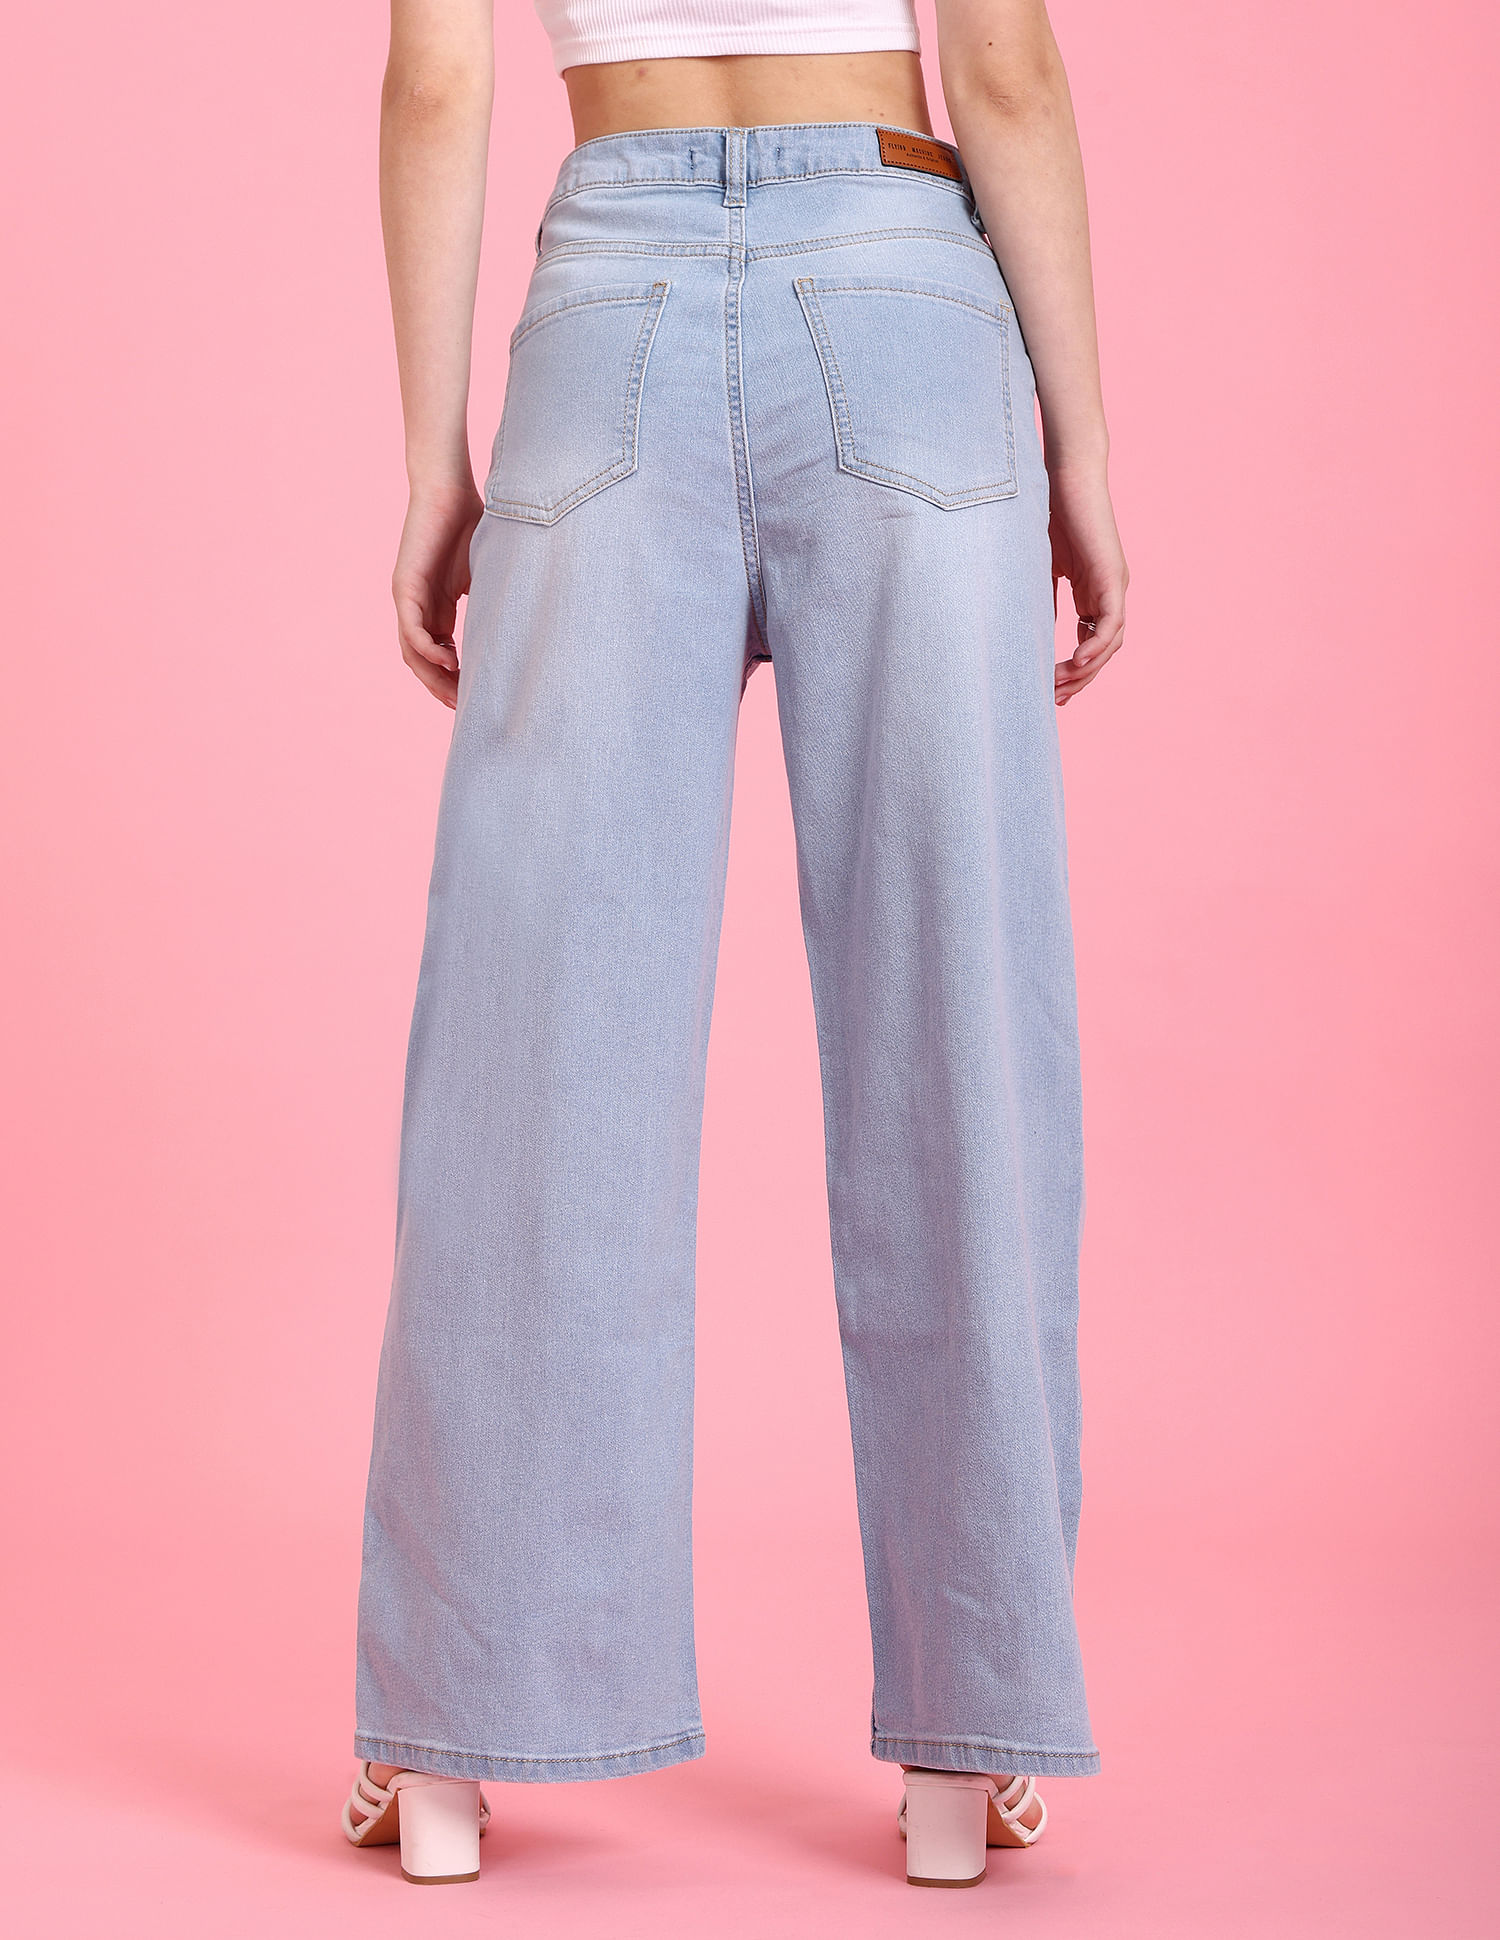 SweatyRocks Women's Casual Boyfriend Jeans High Rise Denim Pants with  Pocket Light Blue XXS at Amazon Women's Jeans store